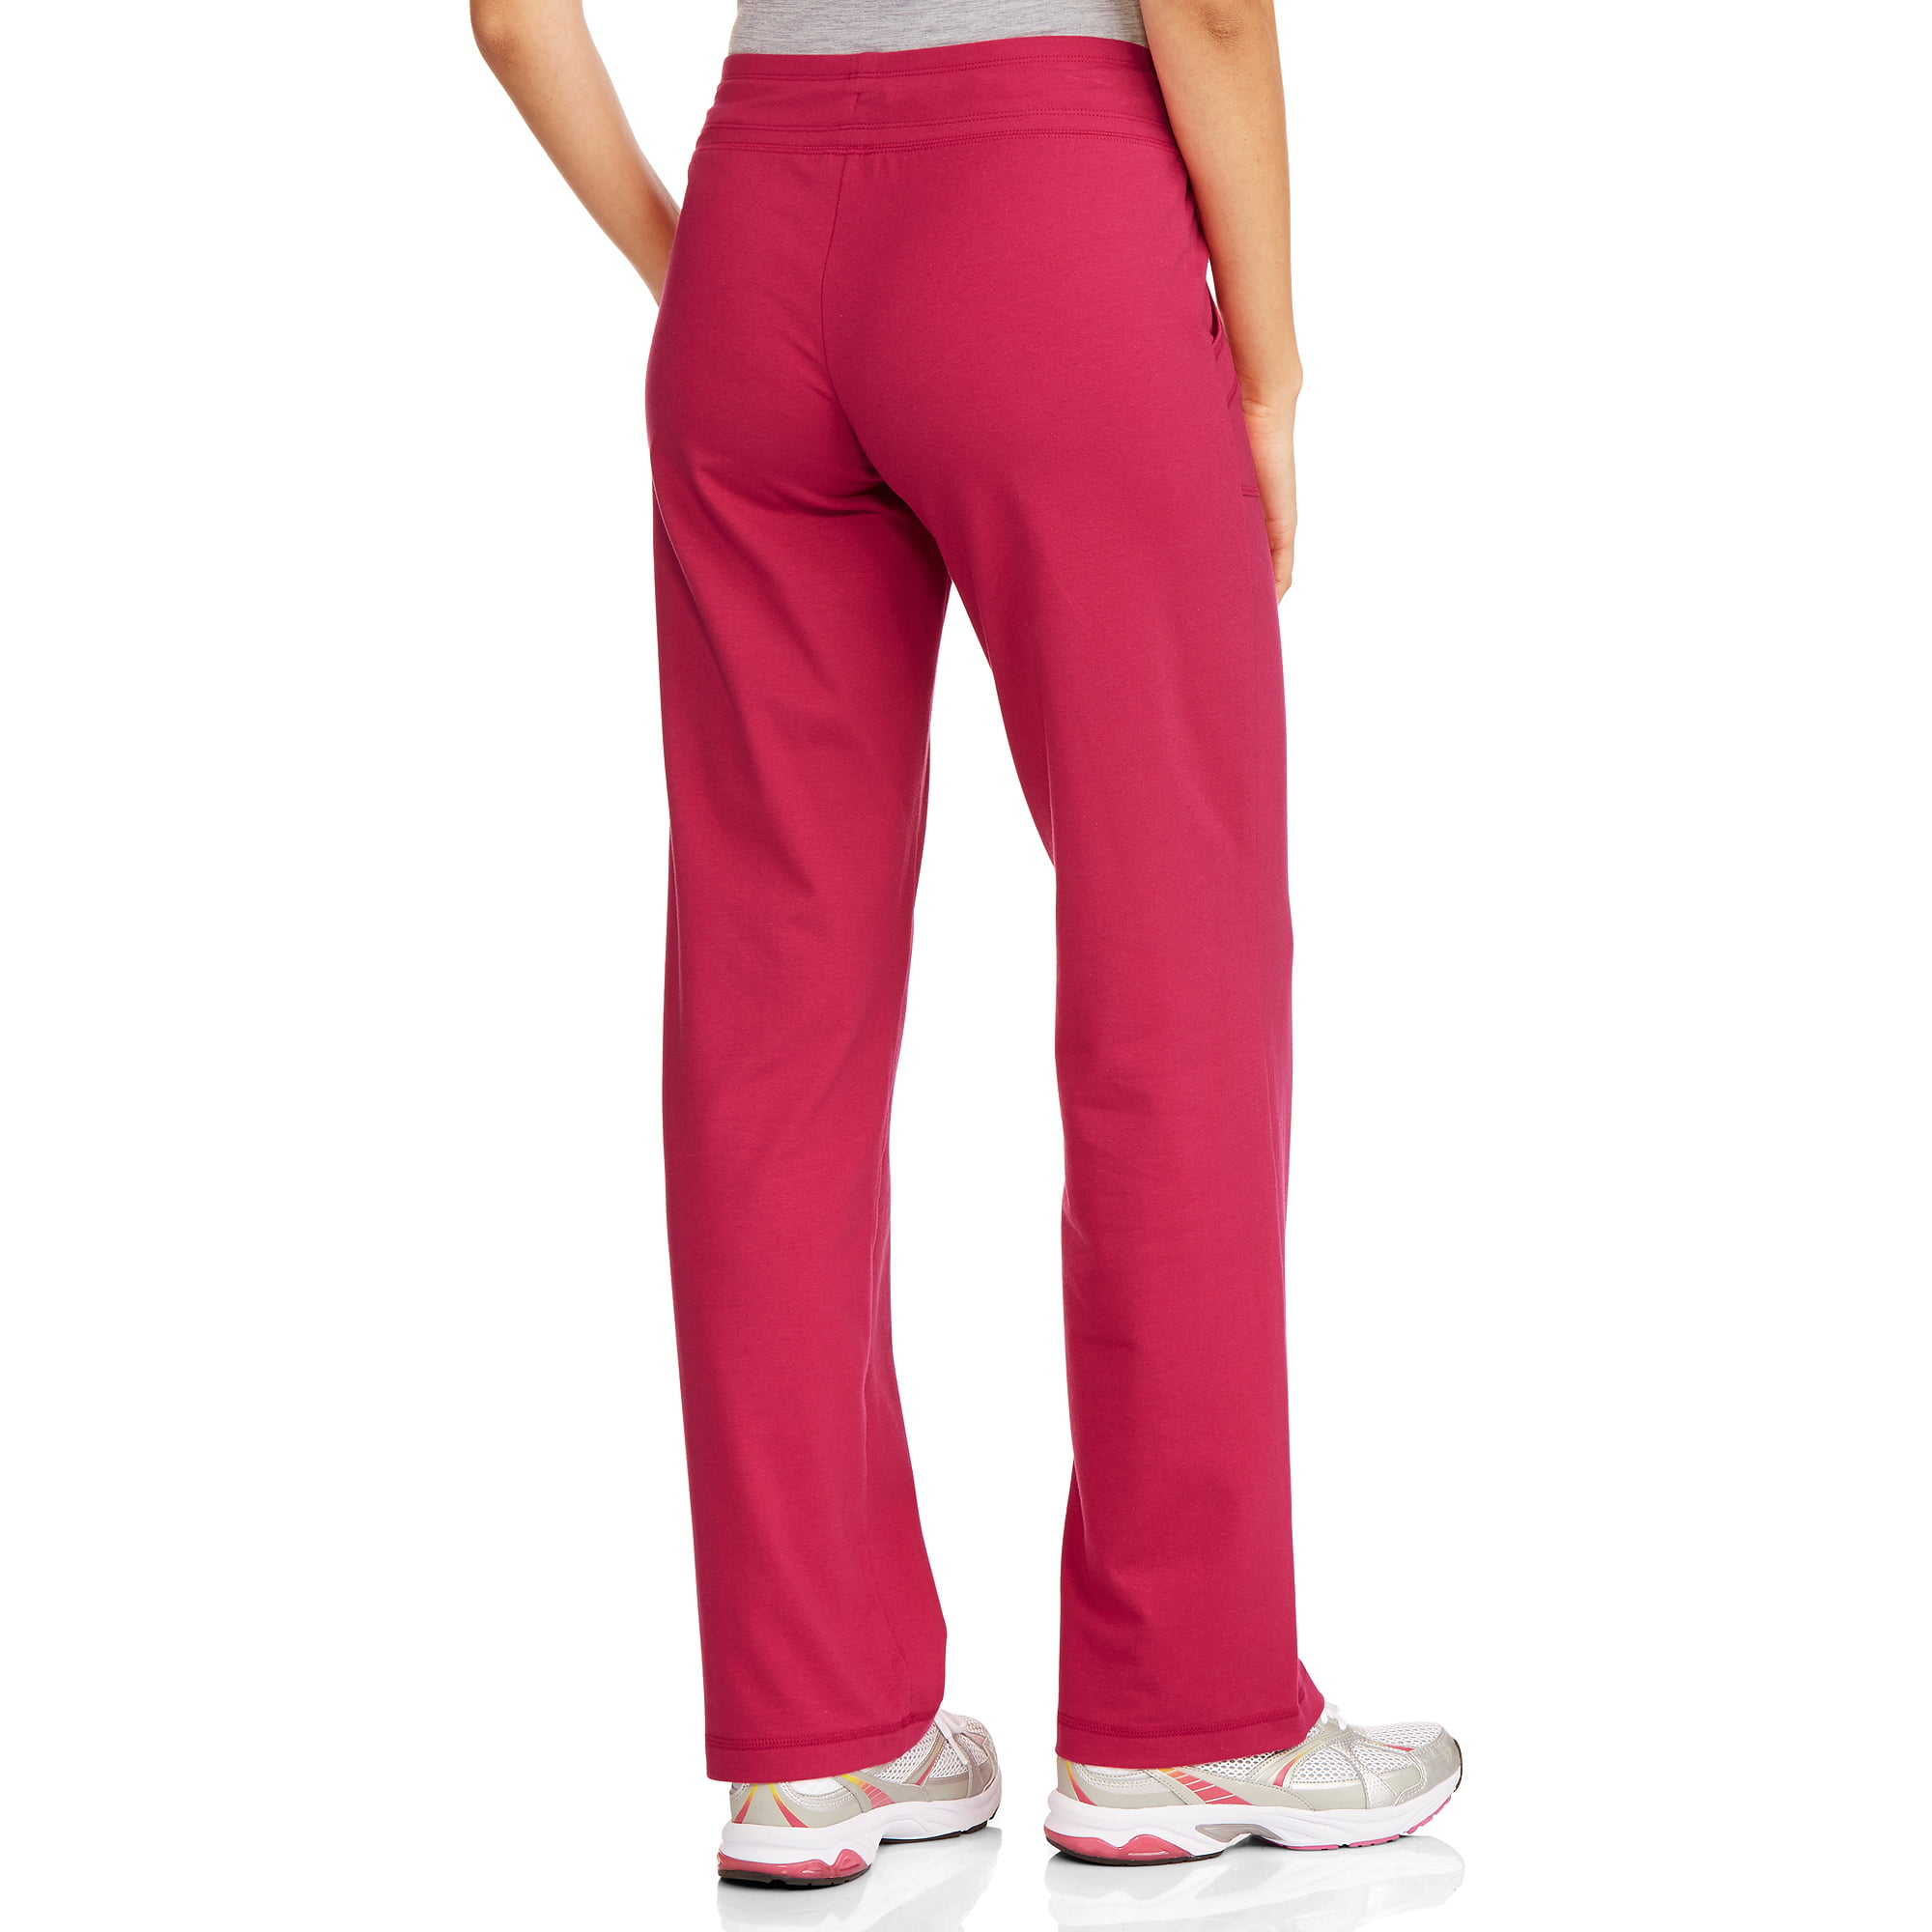 Danskin Now Women's Dri-More Core Capri Pants - Walmart.com